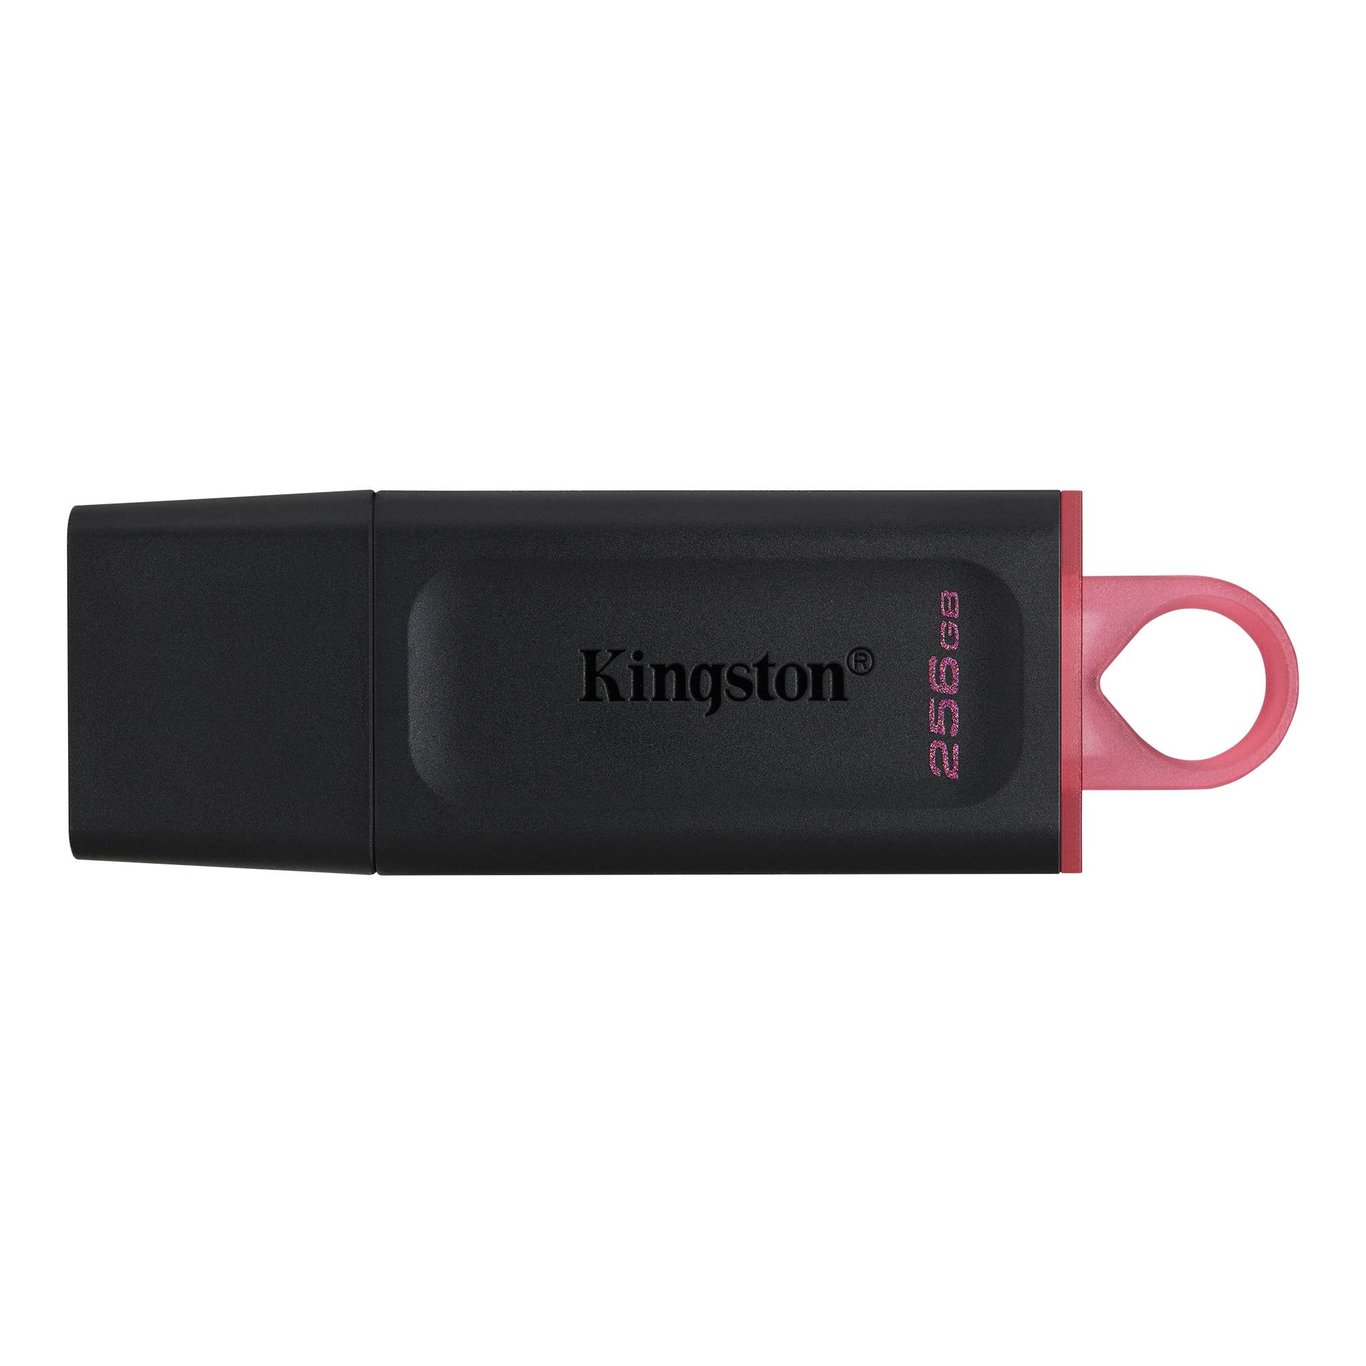 Kingston DataTraveler Exodia USB 隨身碟 - 256GB